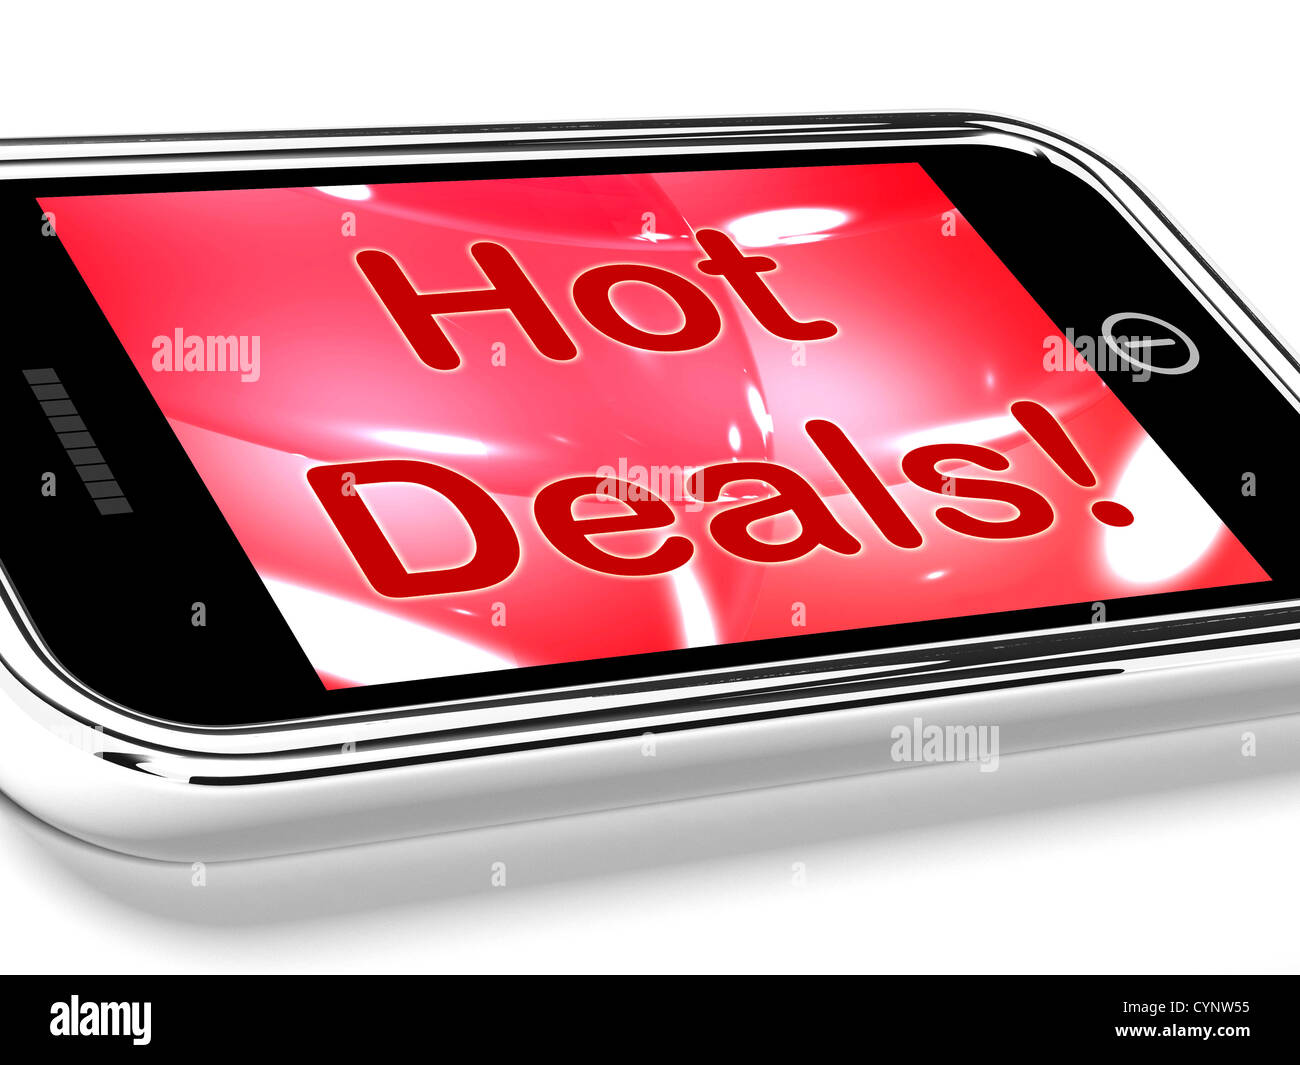 Hot Deals auf dem Handy Bildschirm darstellen Rabatte Online Stockfoto